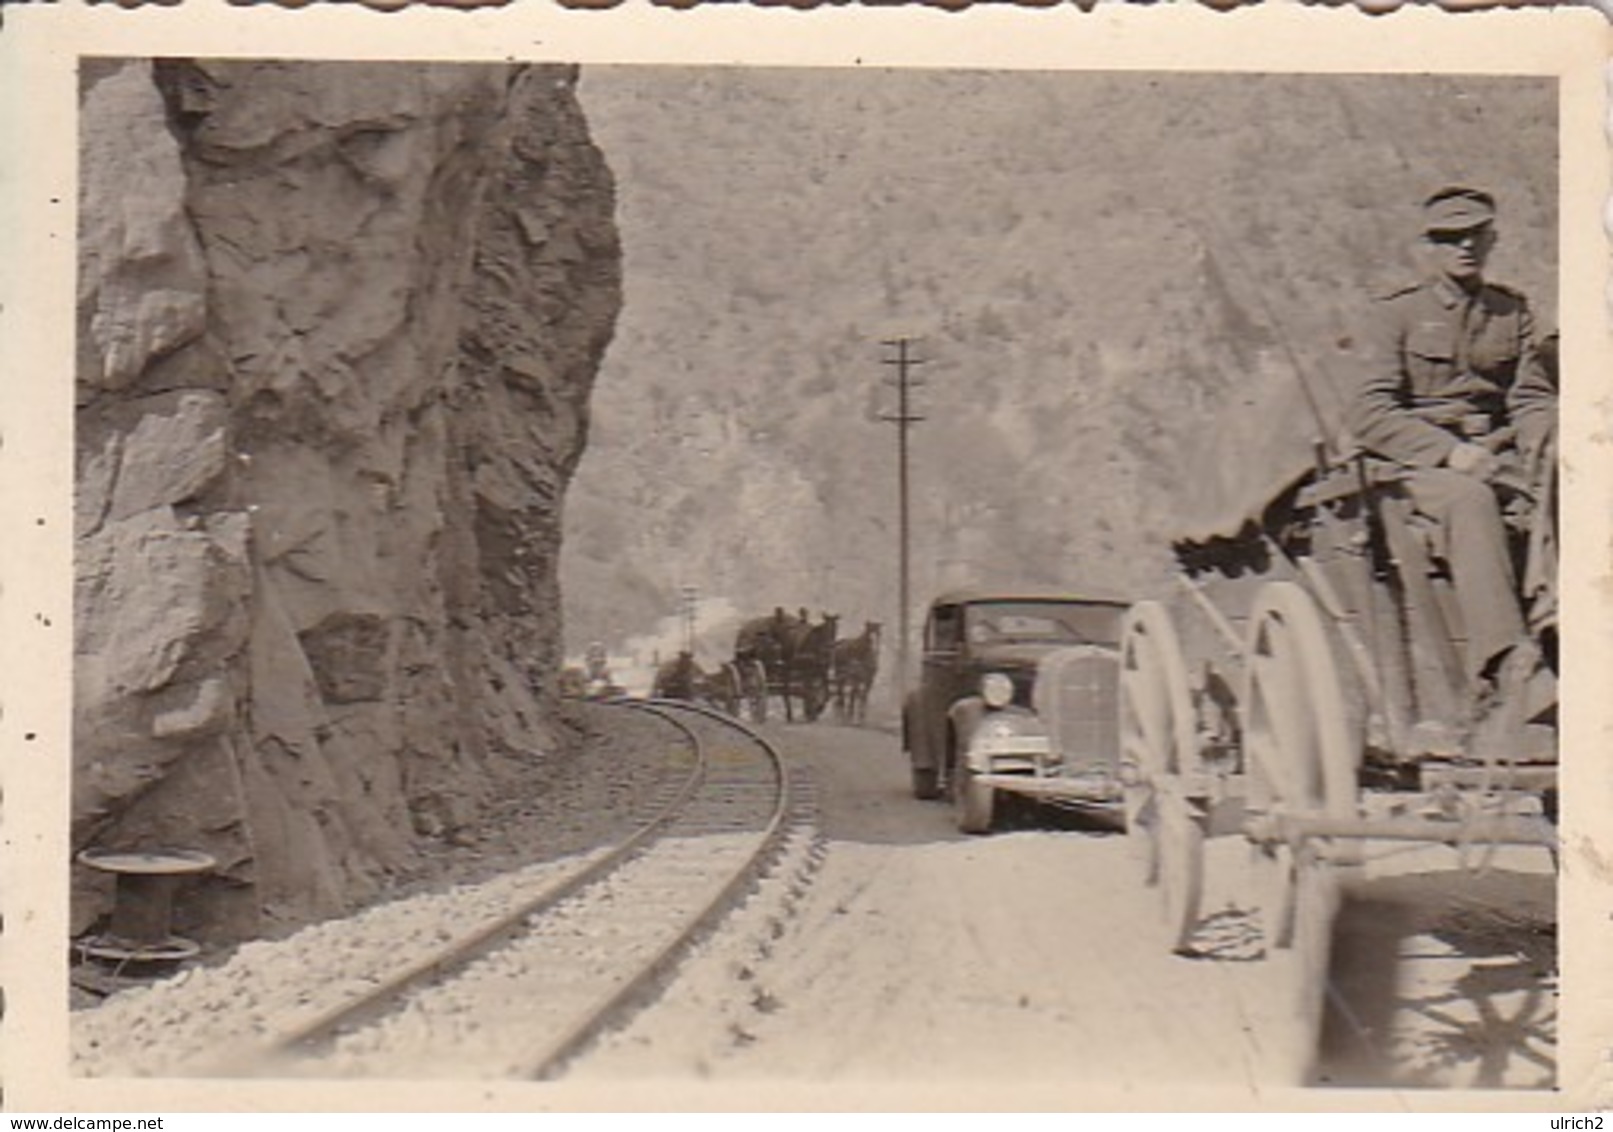 Foto Deutsche Kolonne - Kresnapass - Kresna Gorge Bulgaria - Pioniere IR 46 - 2. WK - 8*5,5cm (43433) - Krieg, Militär